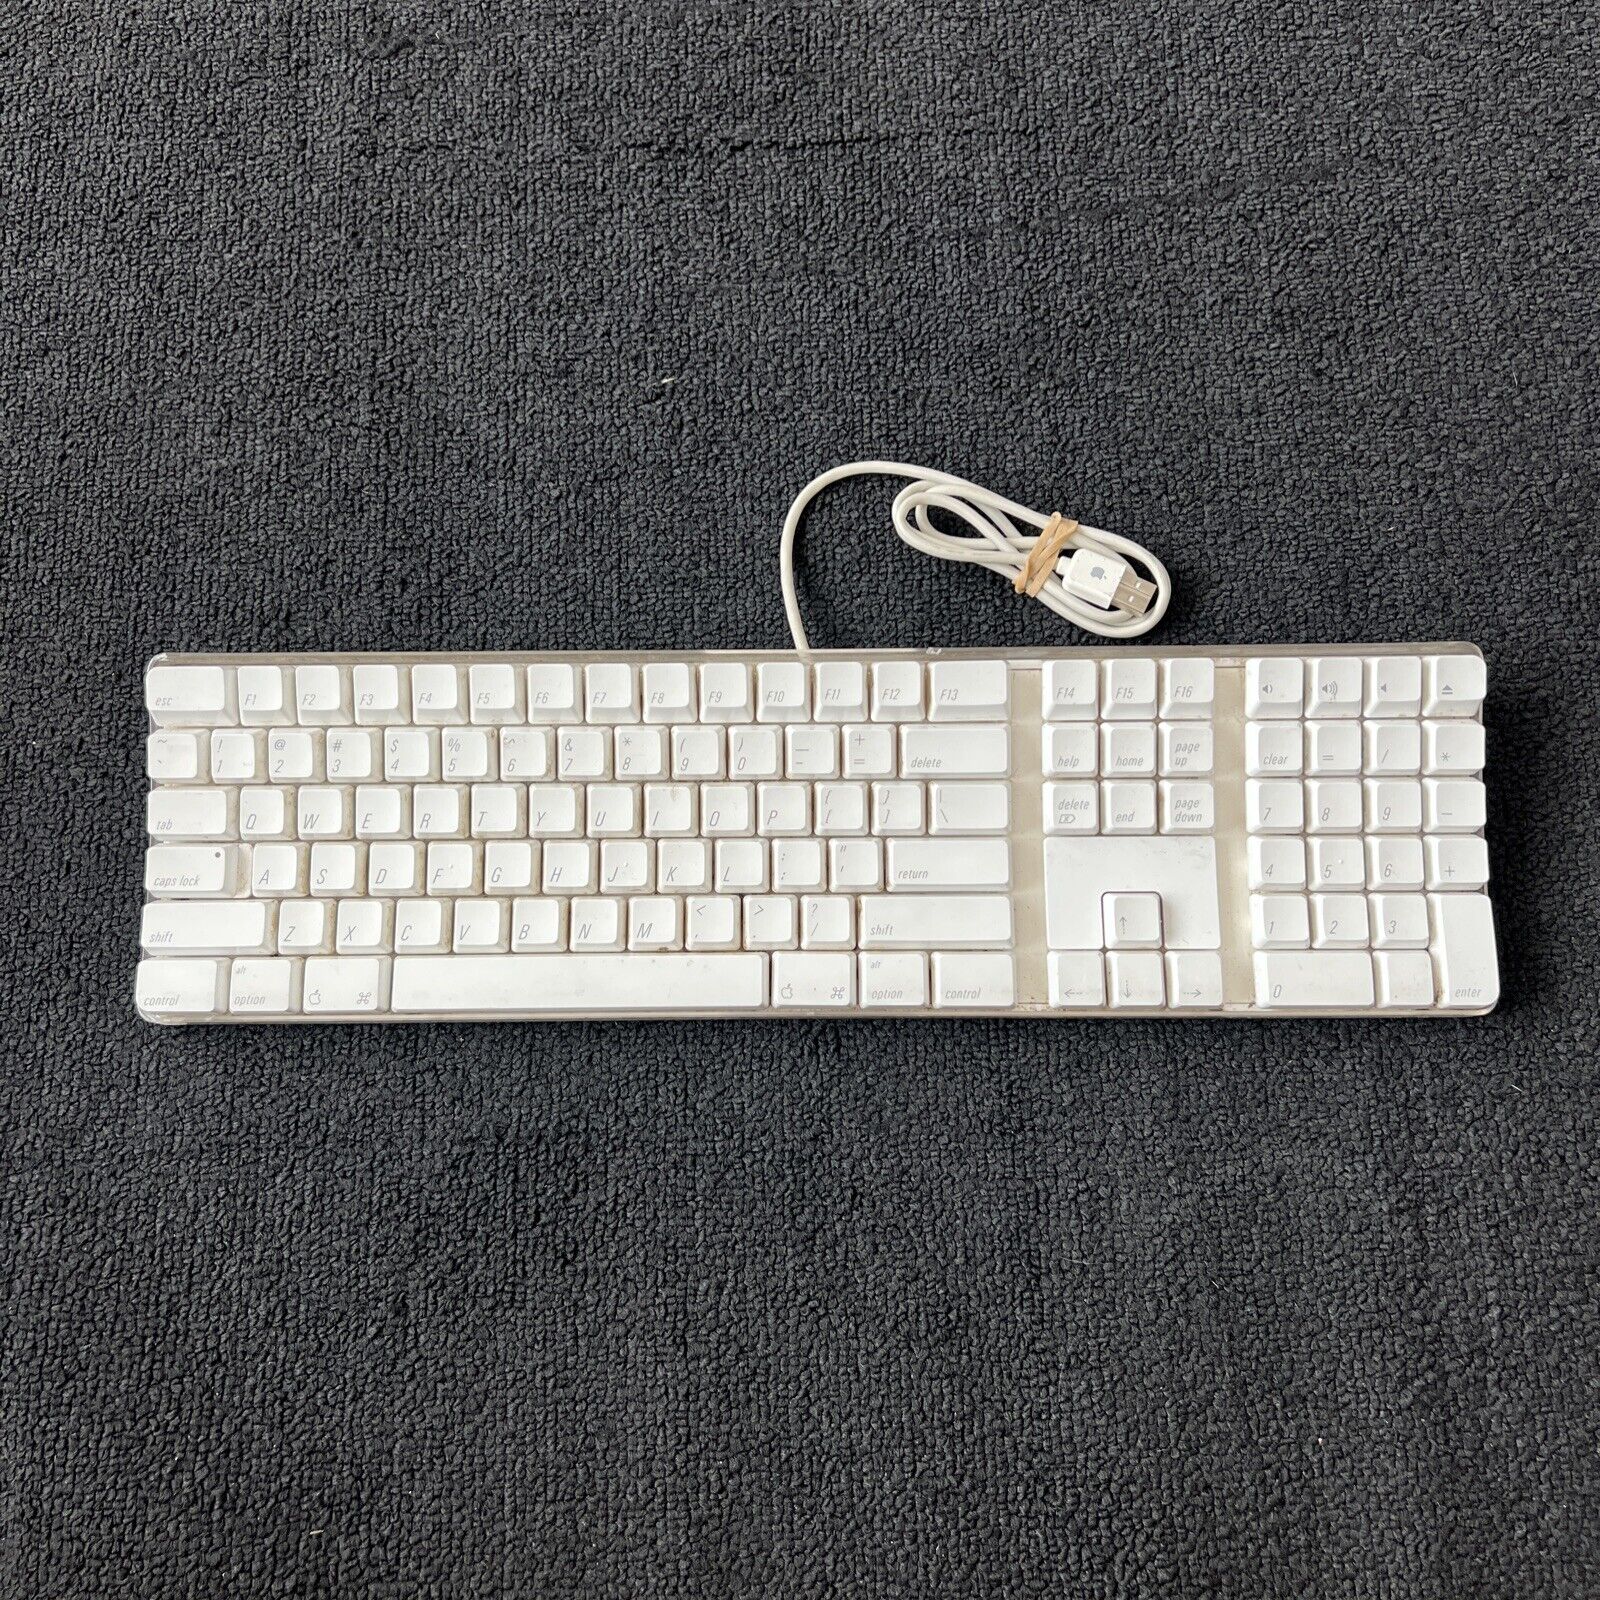 Genuine Apple Wired White Keyboard A1048 EMC1944 USA Layout Tested